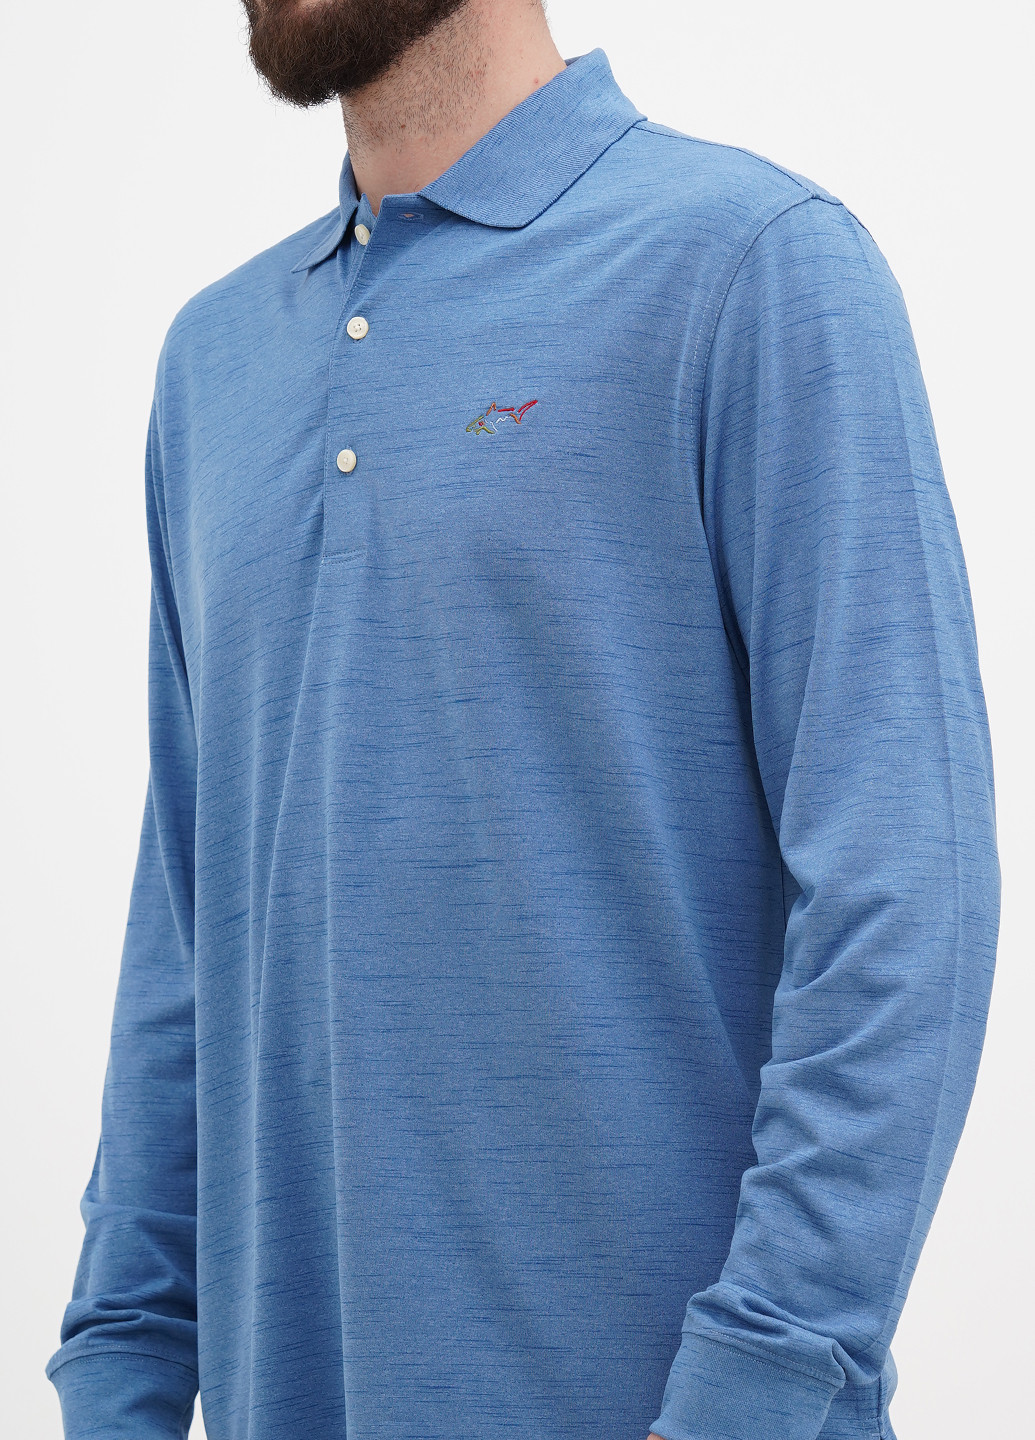 Серо-синяя футболка-поло для мужчин Greg Norman в полоску